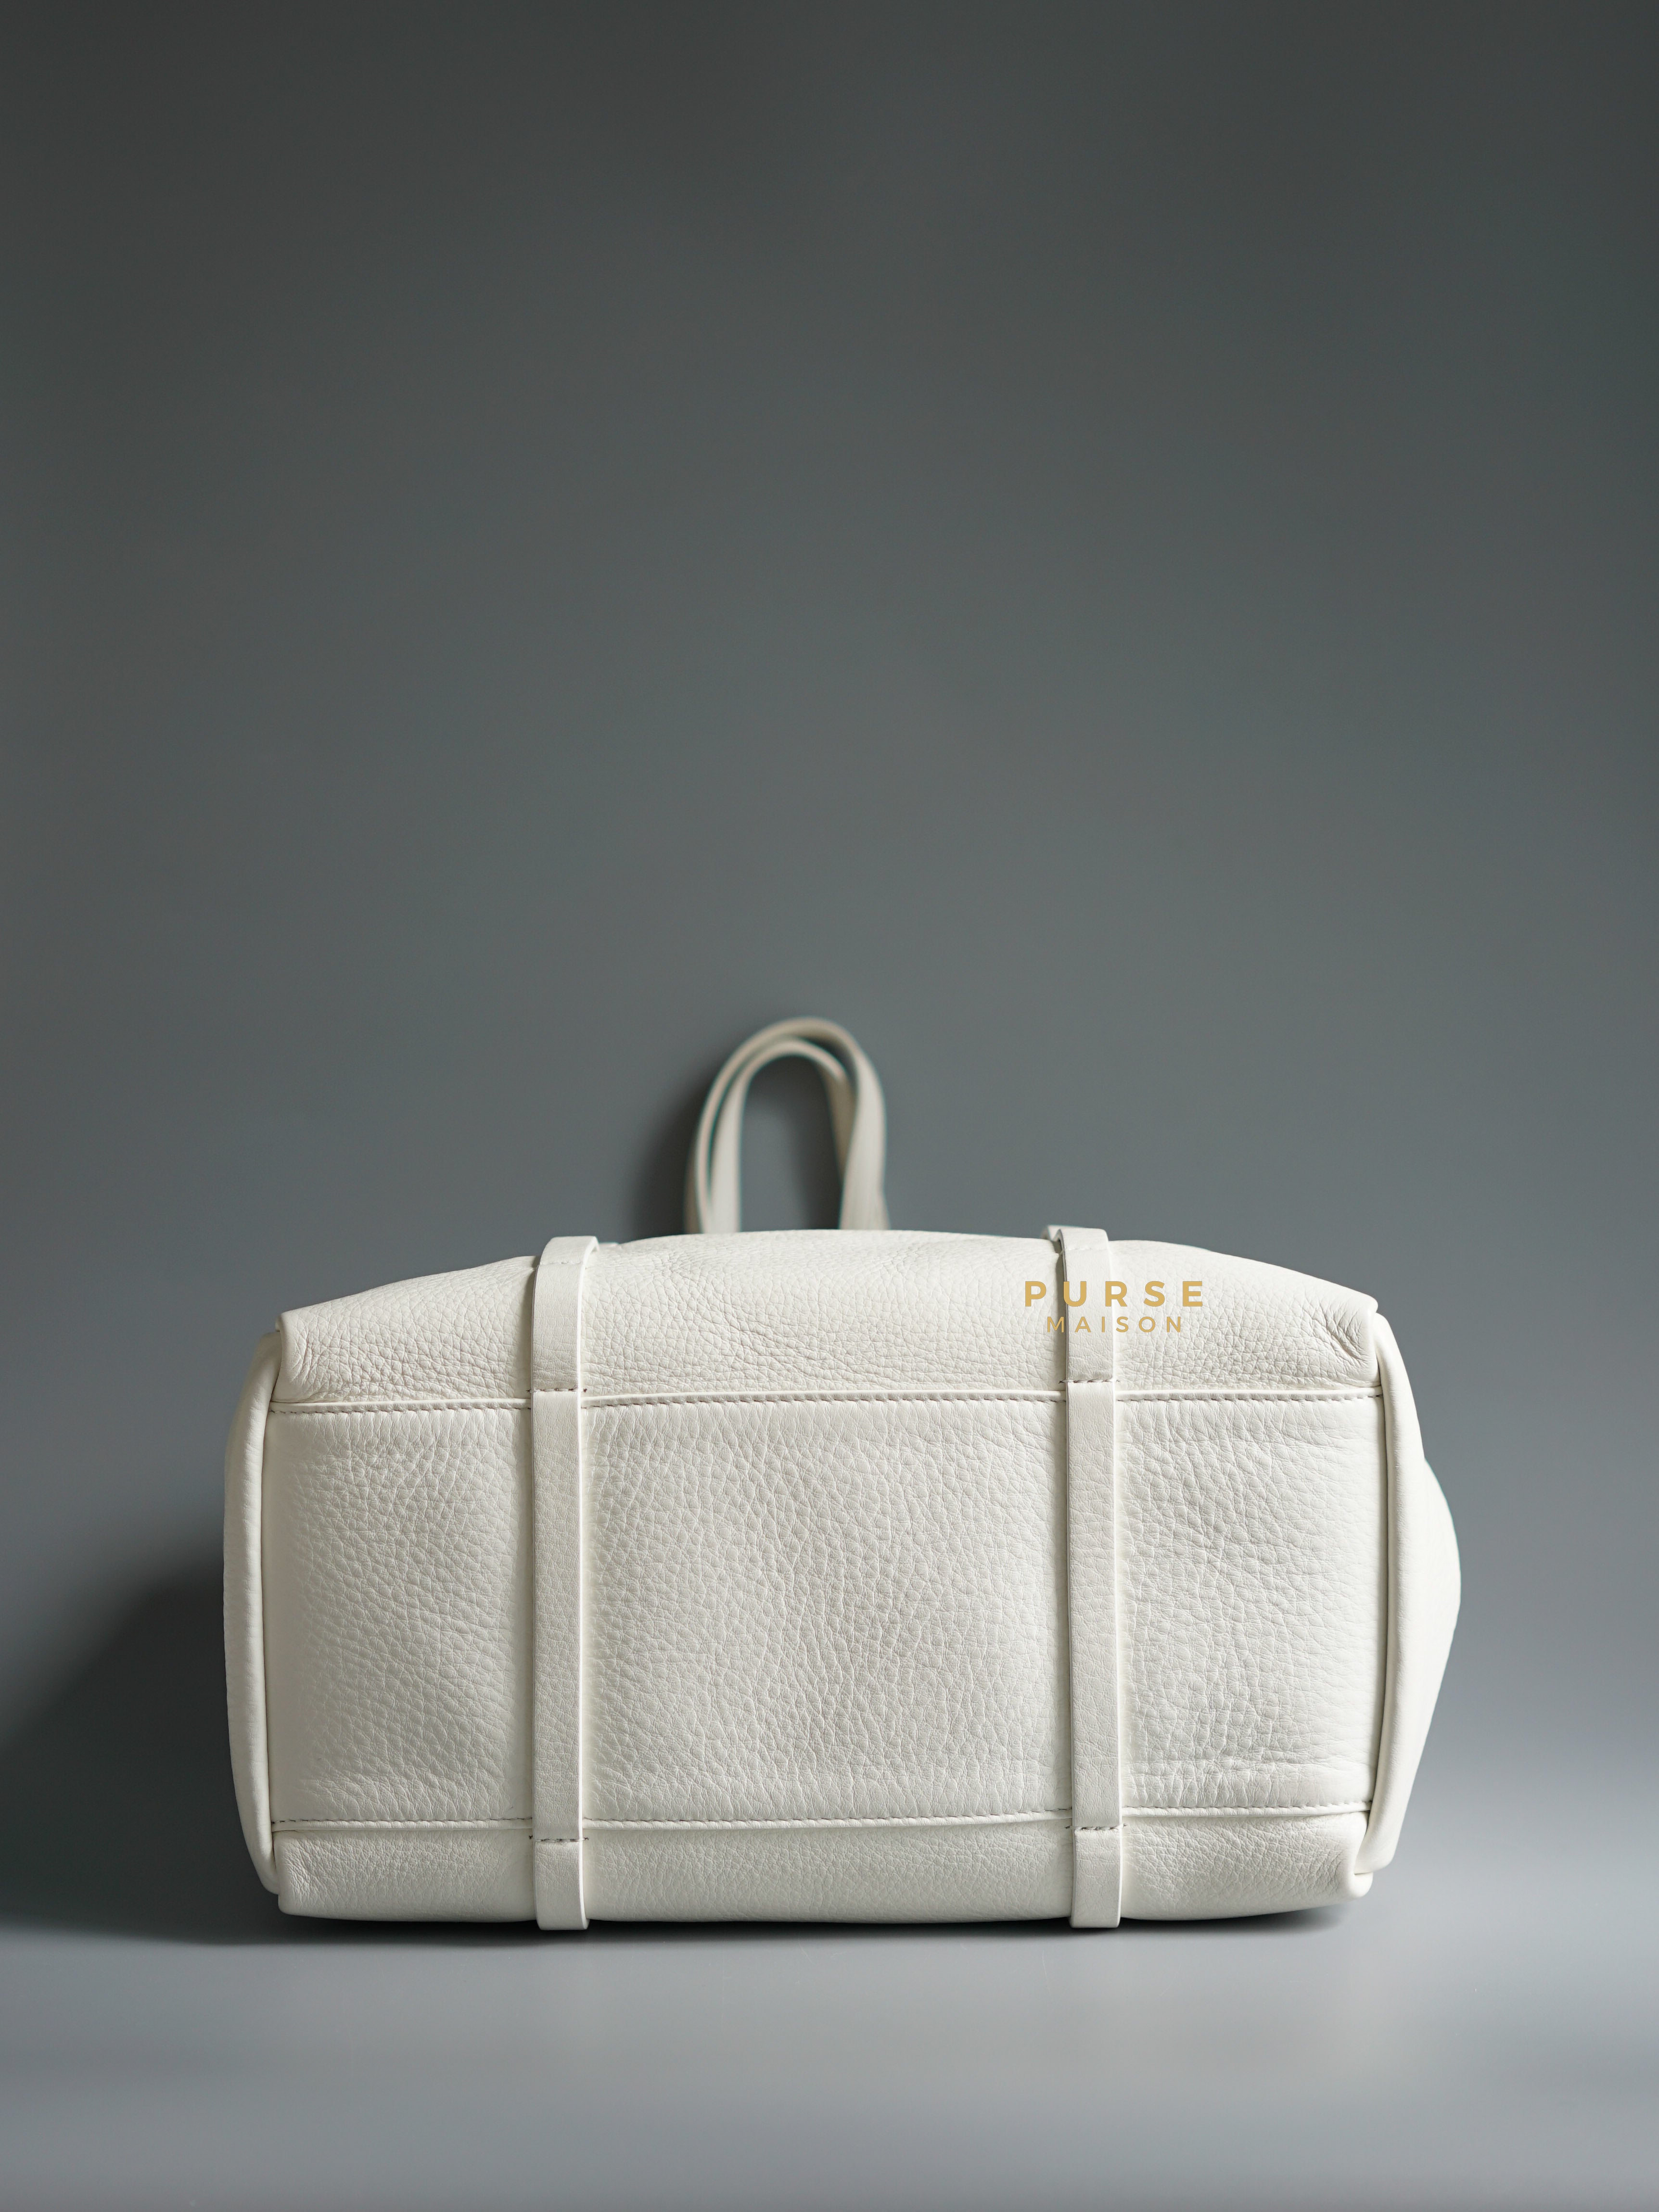 Balenciaga Everyday White Tote Bag | Purse Maison Luxury Bags Shop